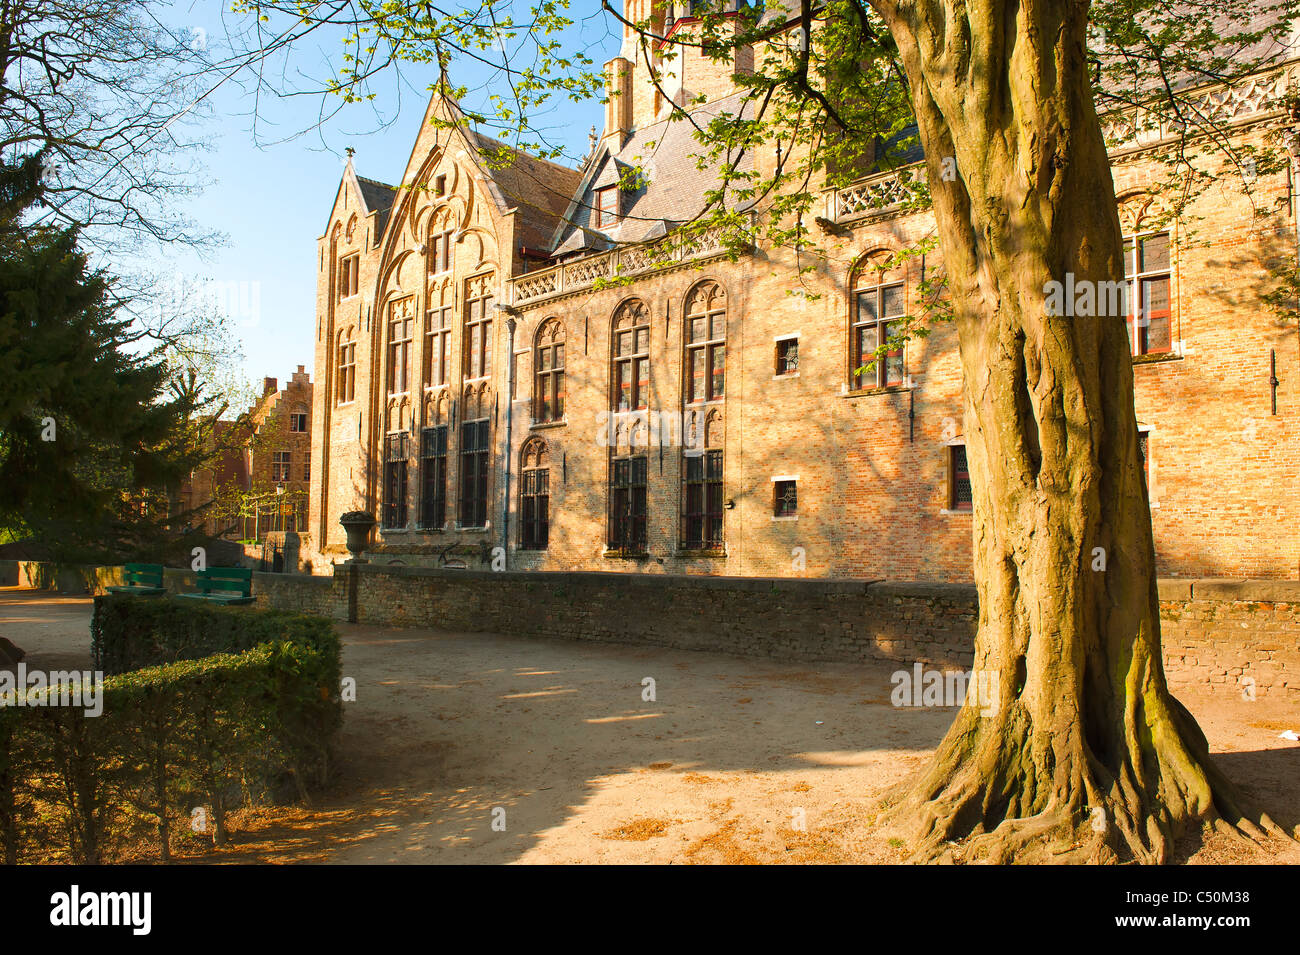 Gruuthuse museum, Historic centre of Bruges, Belgium Stock Photo